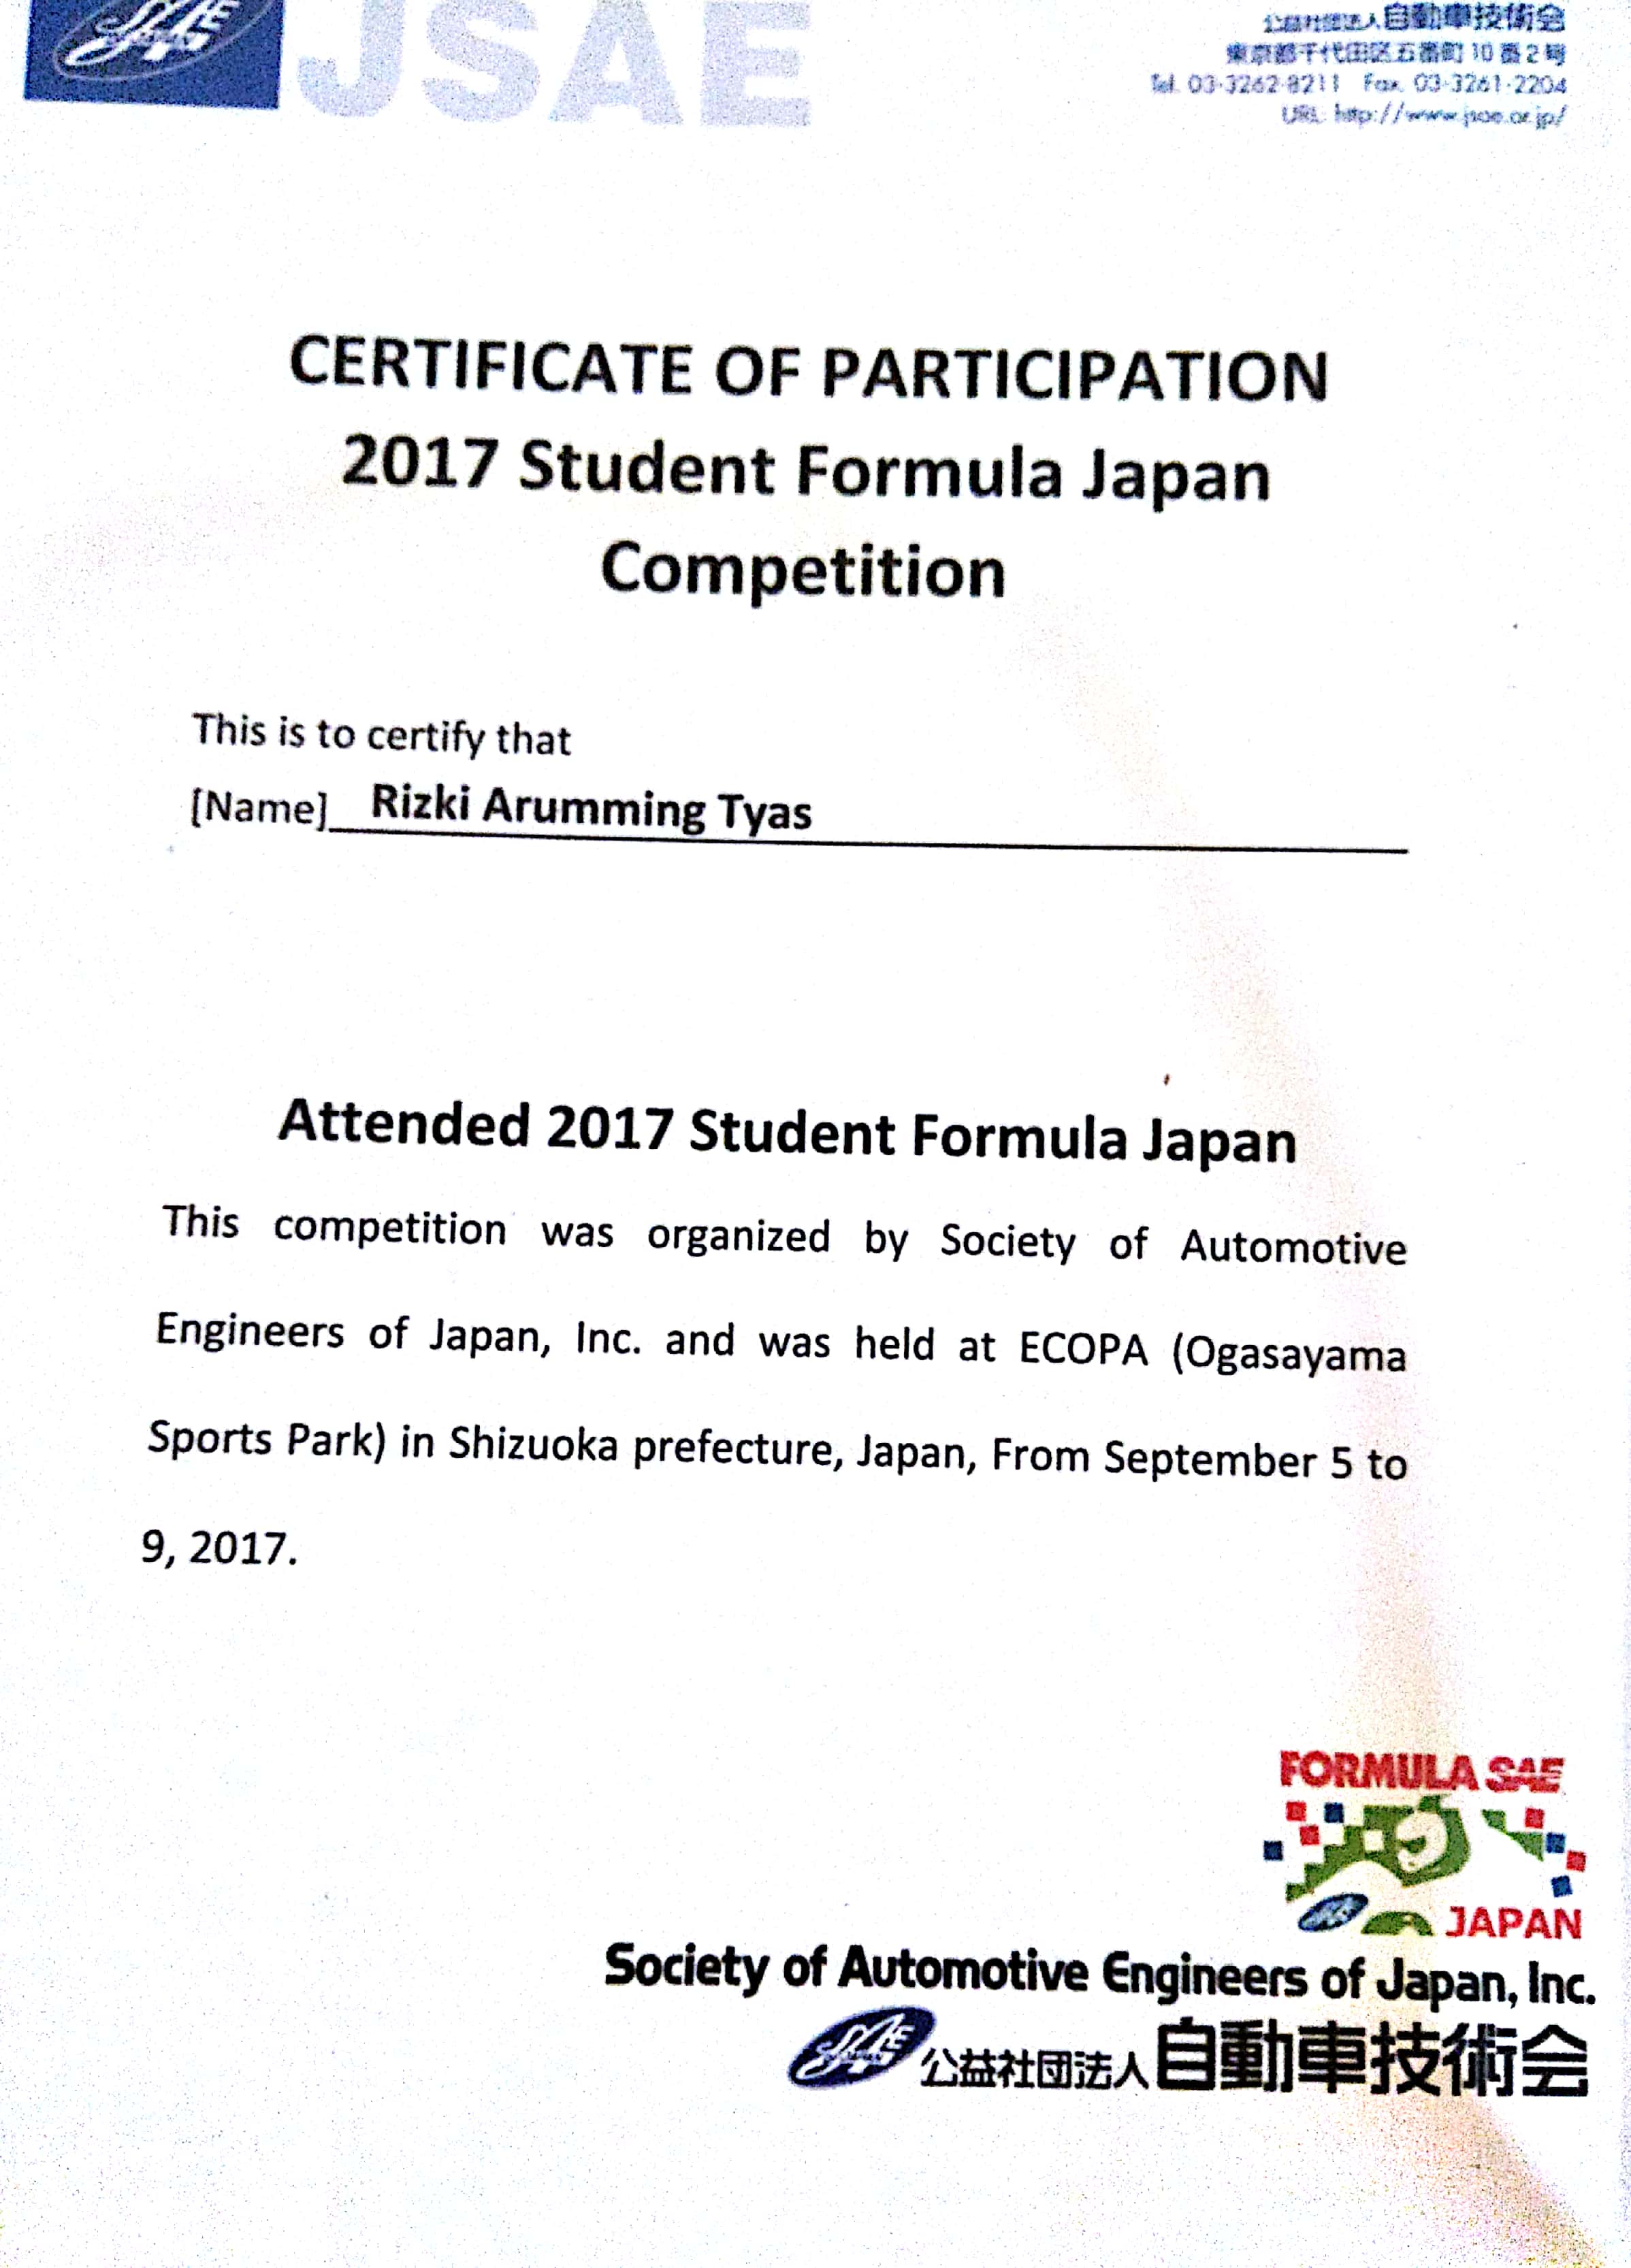 Foto 2017 Student Formula Japan